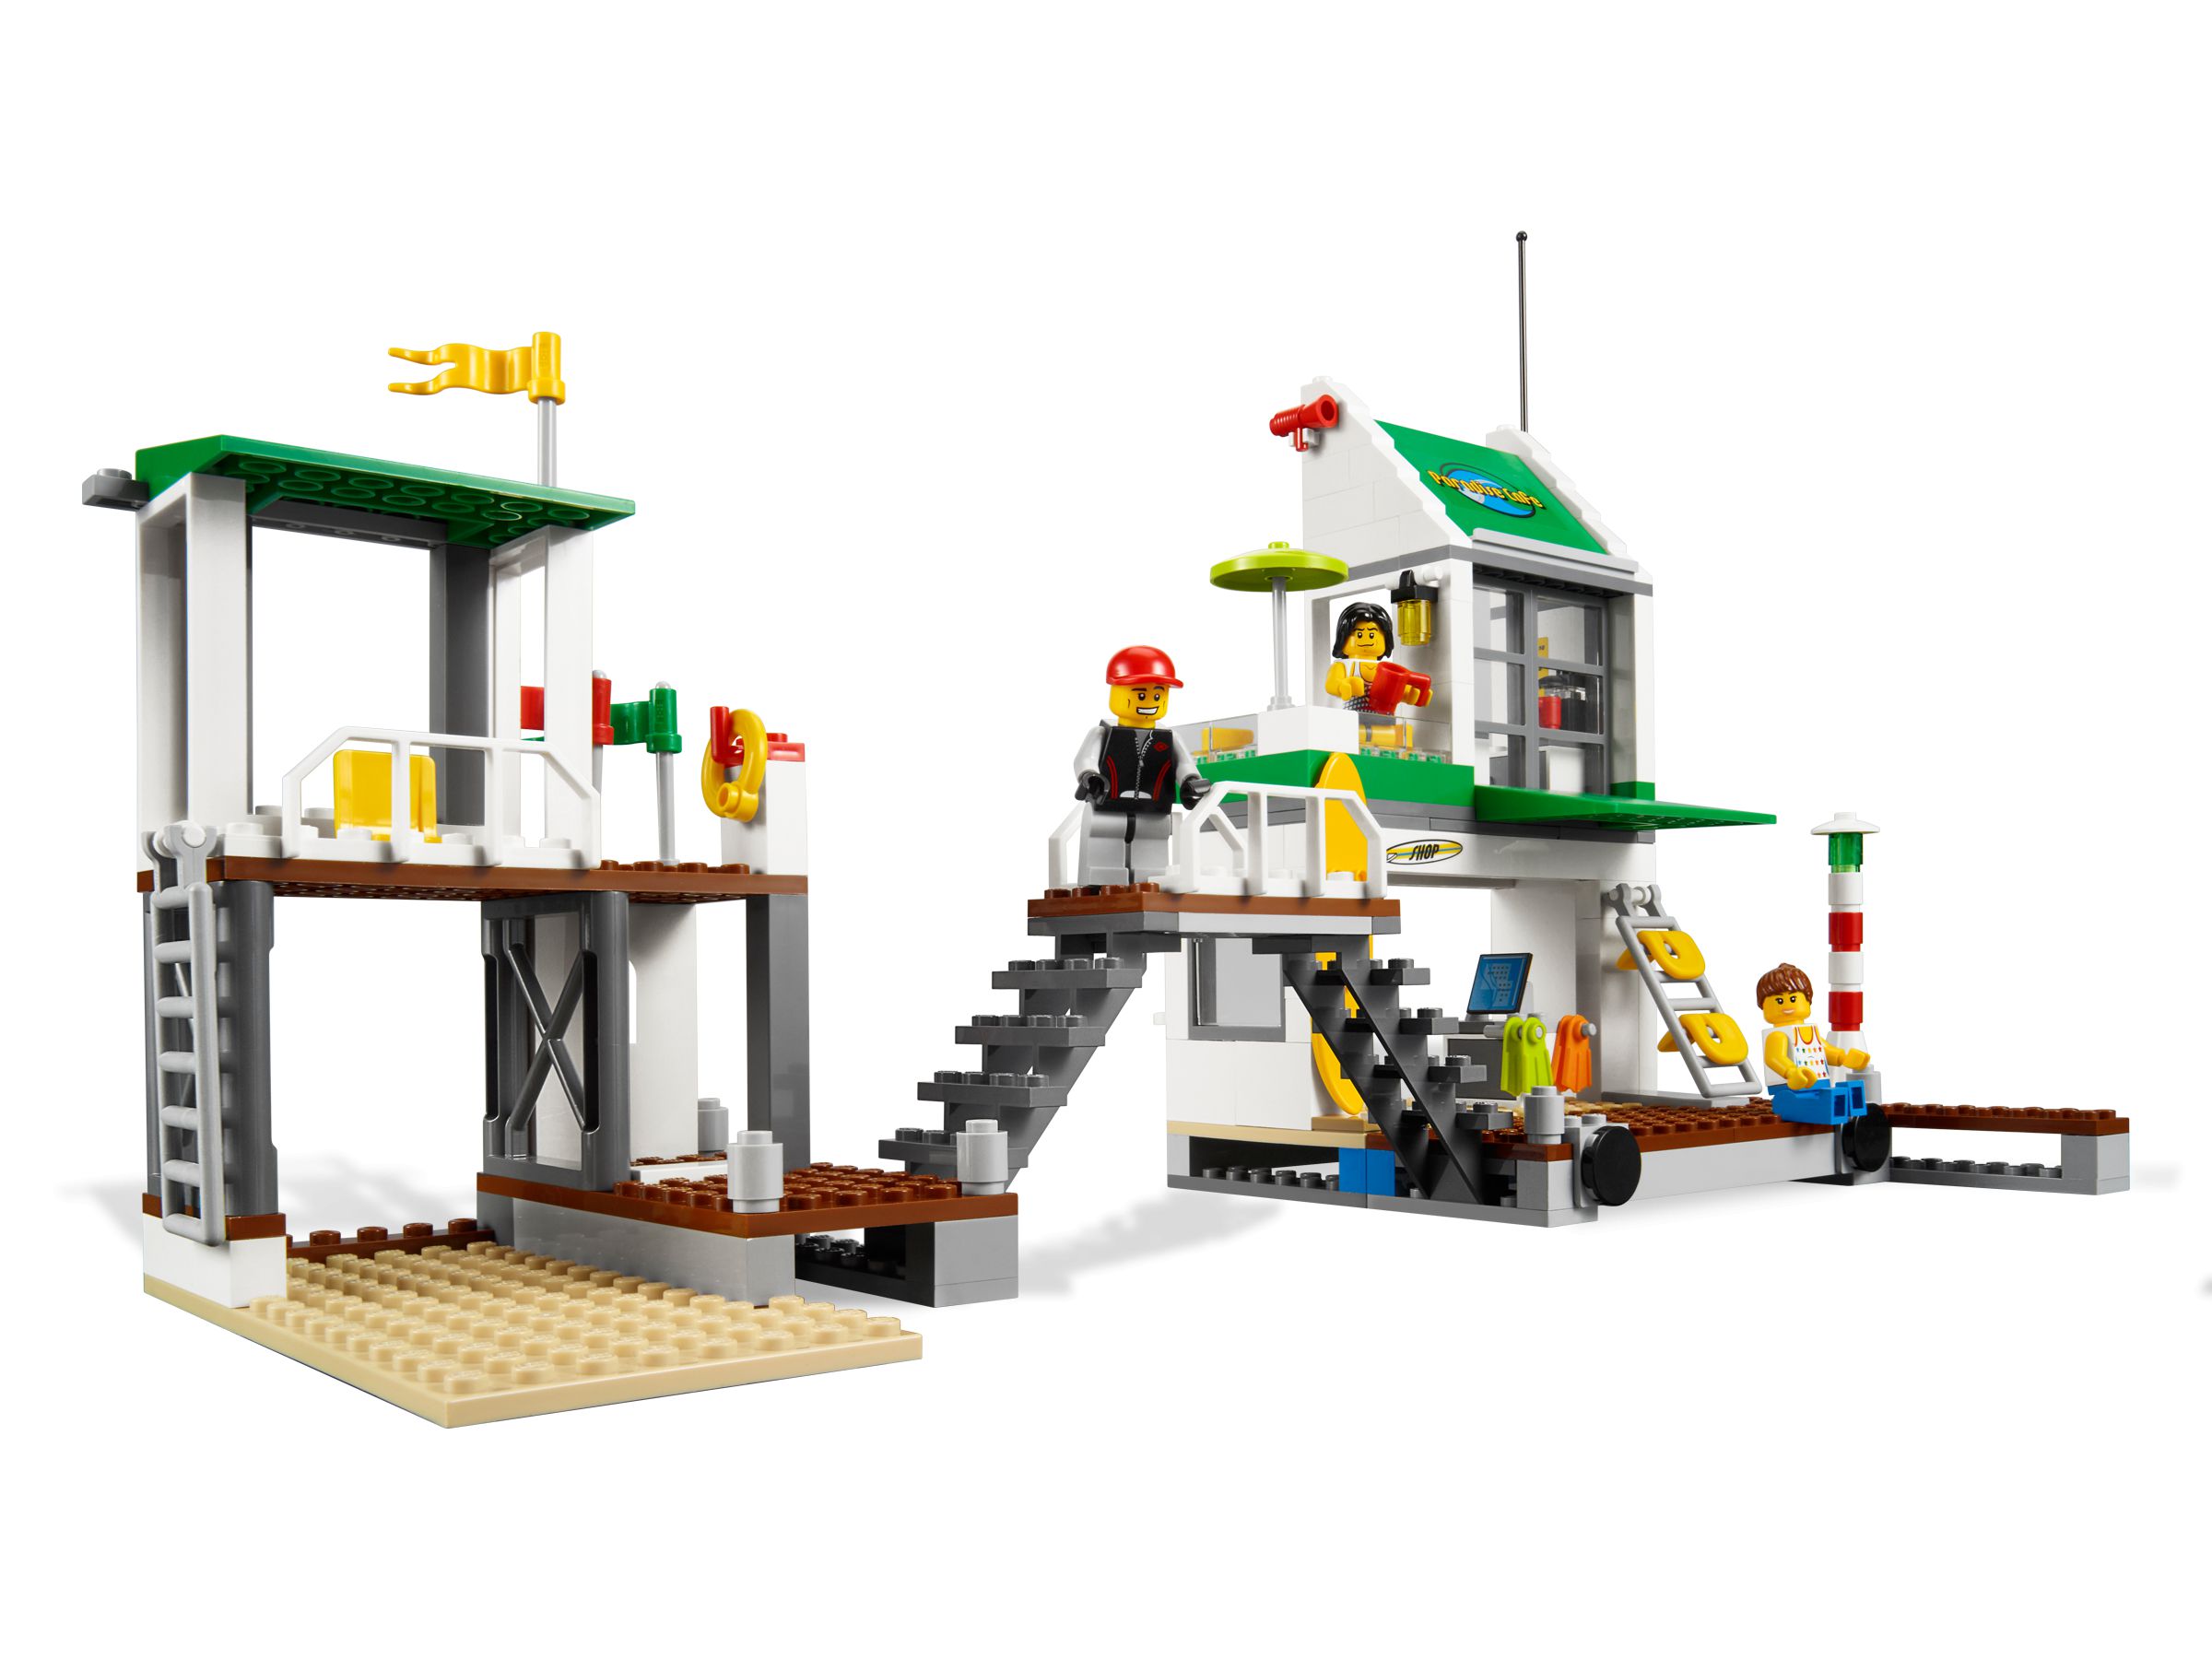 LEGO City 4644 Strandpromenade LEGO_4644_alt5.jpg